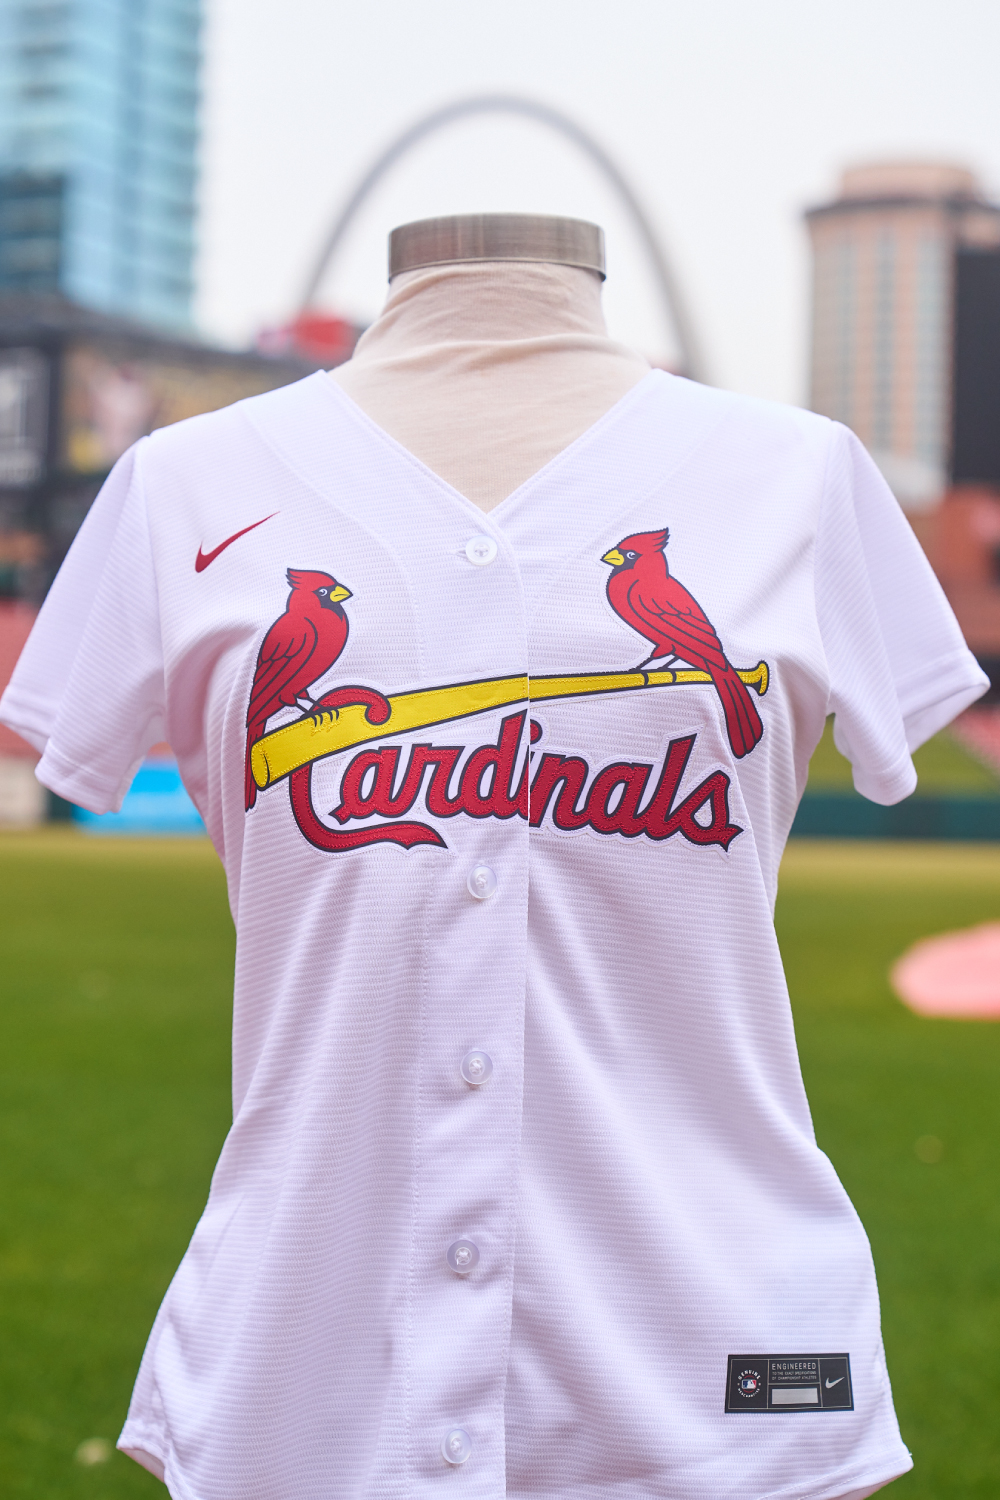 Official St. Louis Cardinals Jerseys, Cardinals Baseball Jerseys, Uniforms